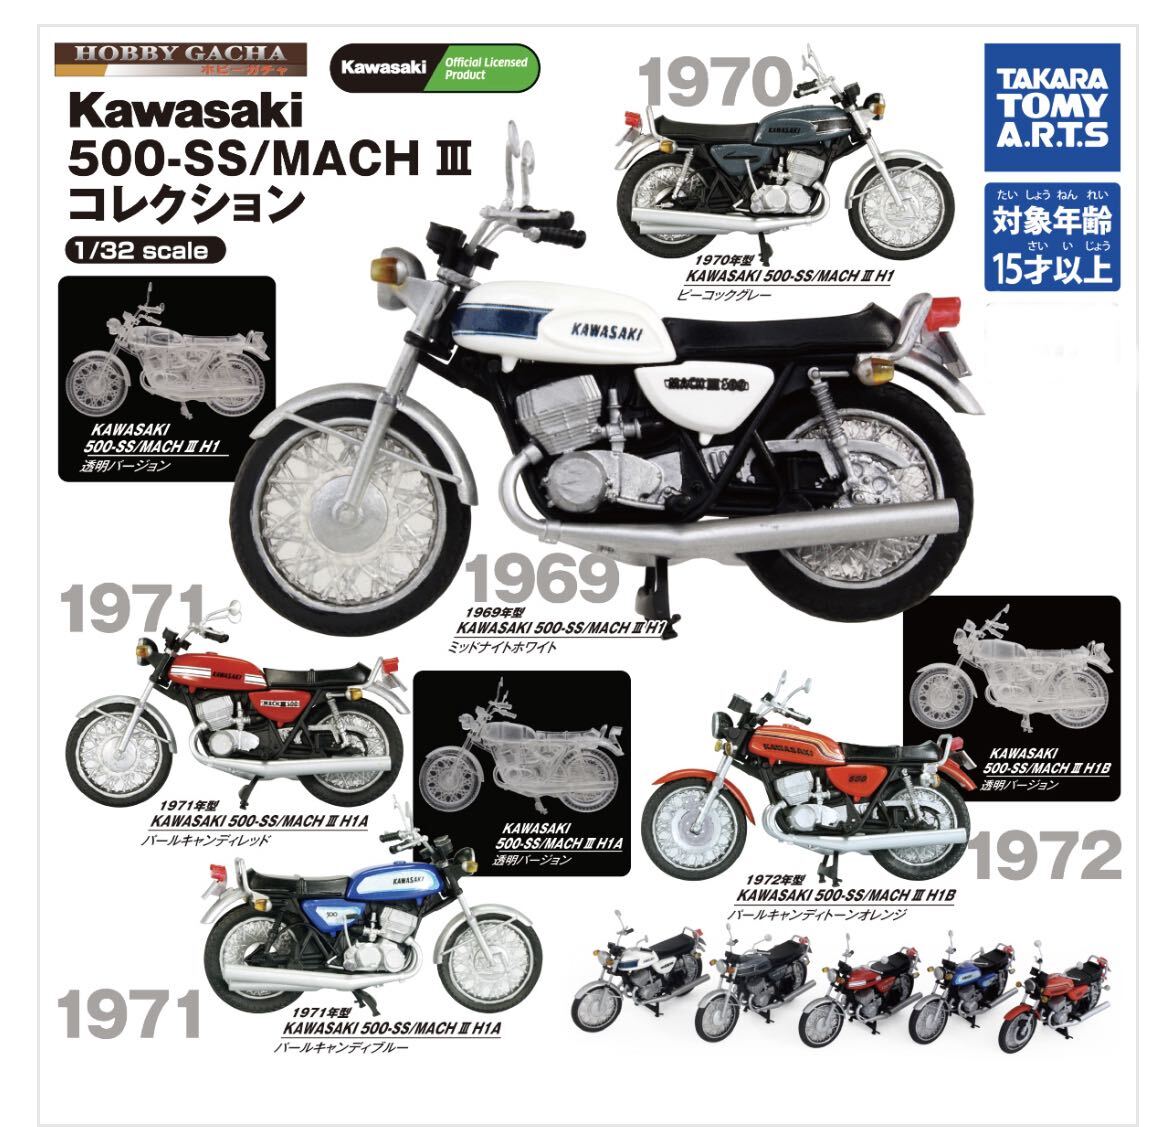 KAWASAKI 500-SS/MACH III コレクション 1969年型 H1 ミッドナイトホワイト バンダイ ガチャ 新品未使用品_画像2